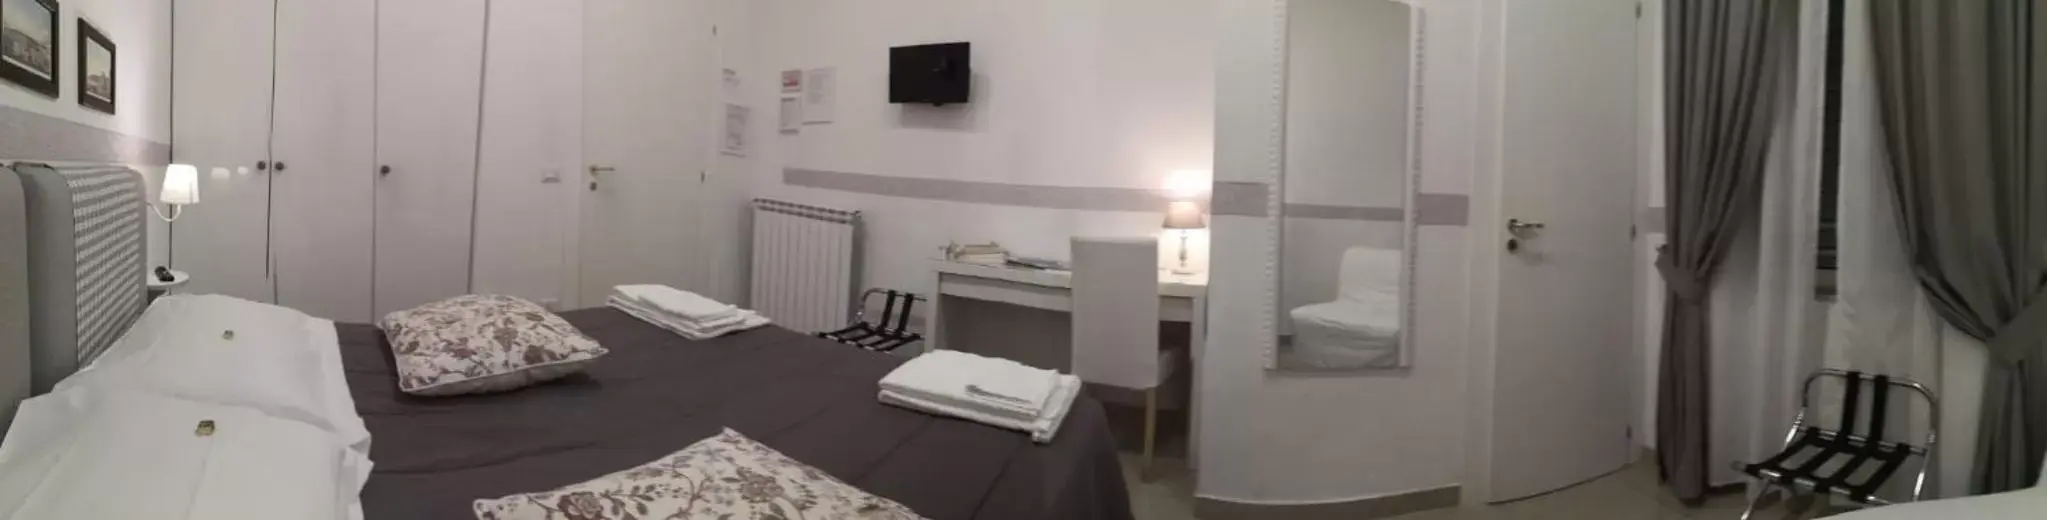 Bedroom in Guantai 30